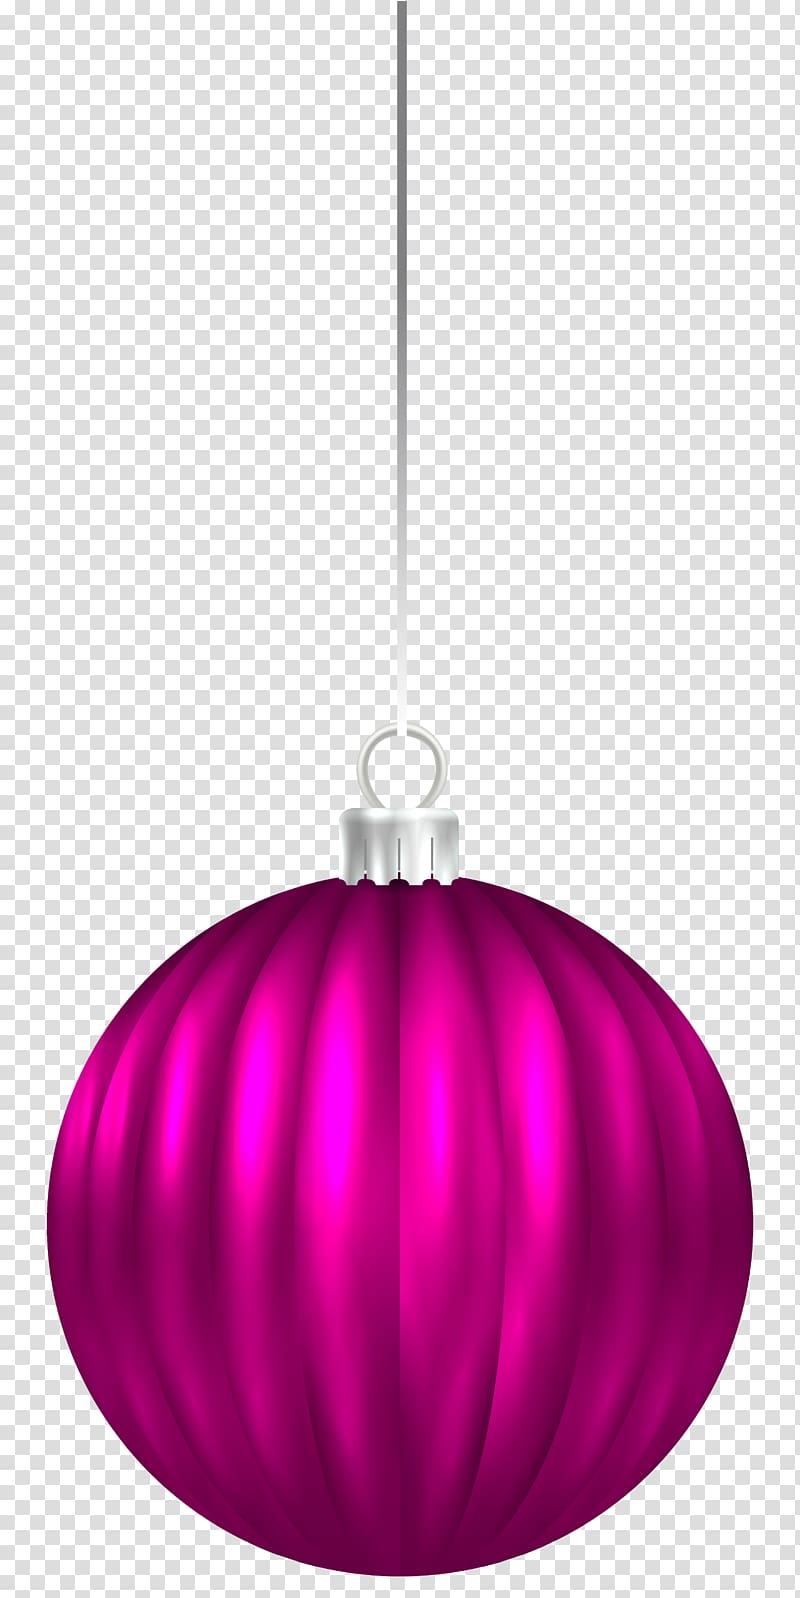 purple bauble ball, Lighting Light fixture Electric light Design, Pink Christmas Ball Ornament transparent background PNG clipart